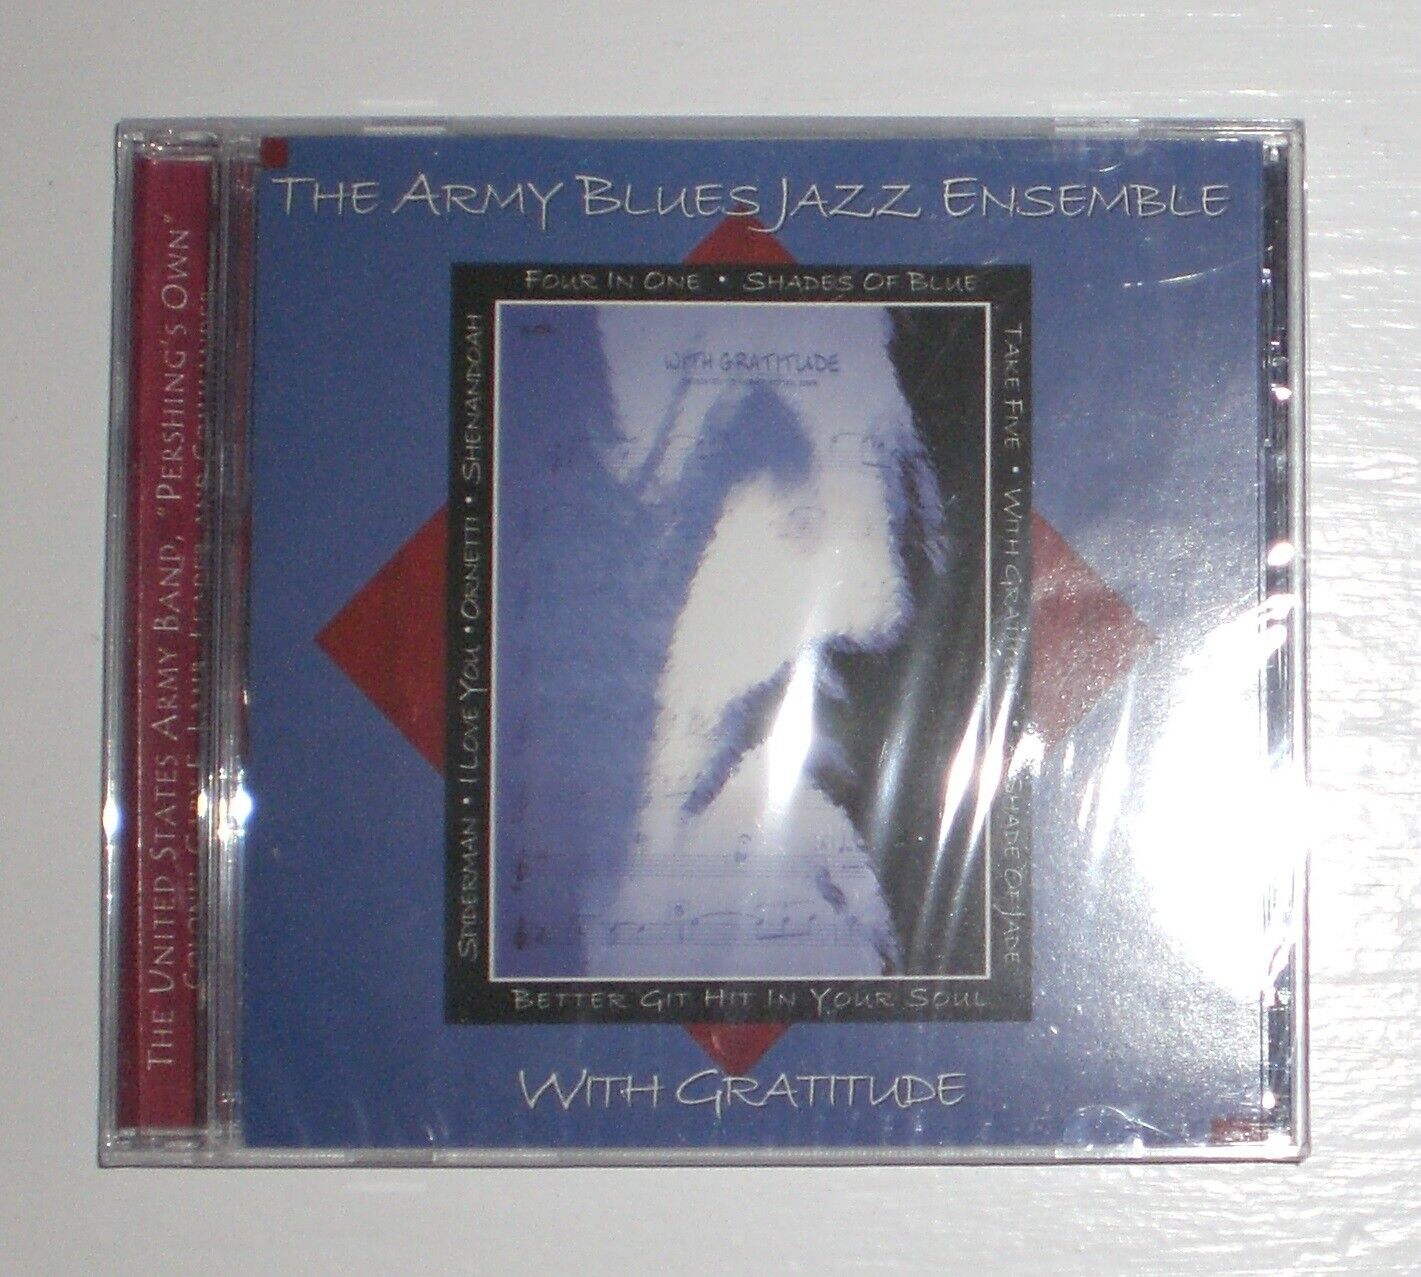 With Gratitude by U.S. Army Blues Jazz Ensemble - Music Audio cd